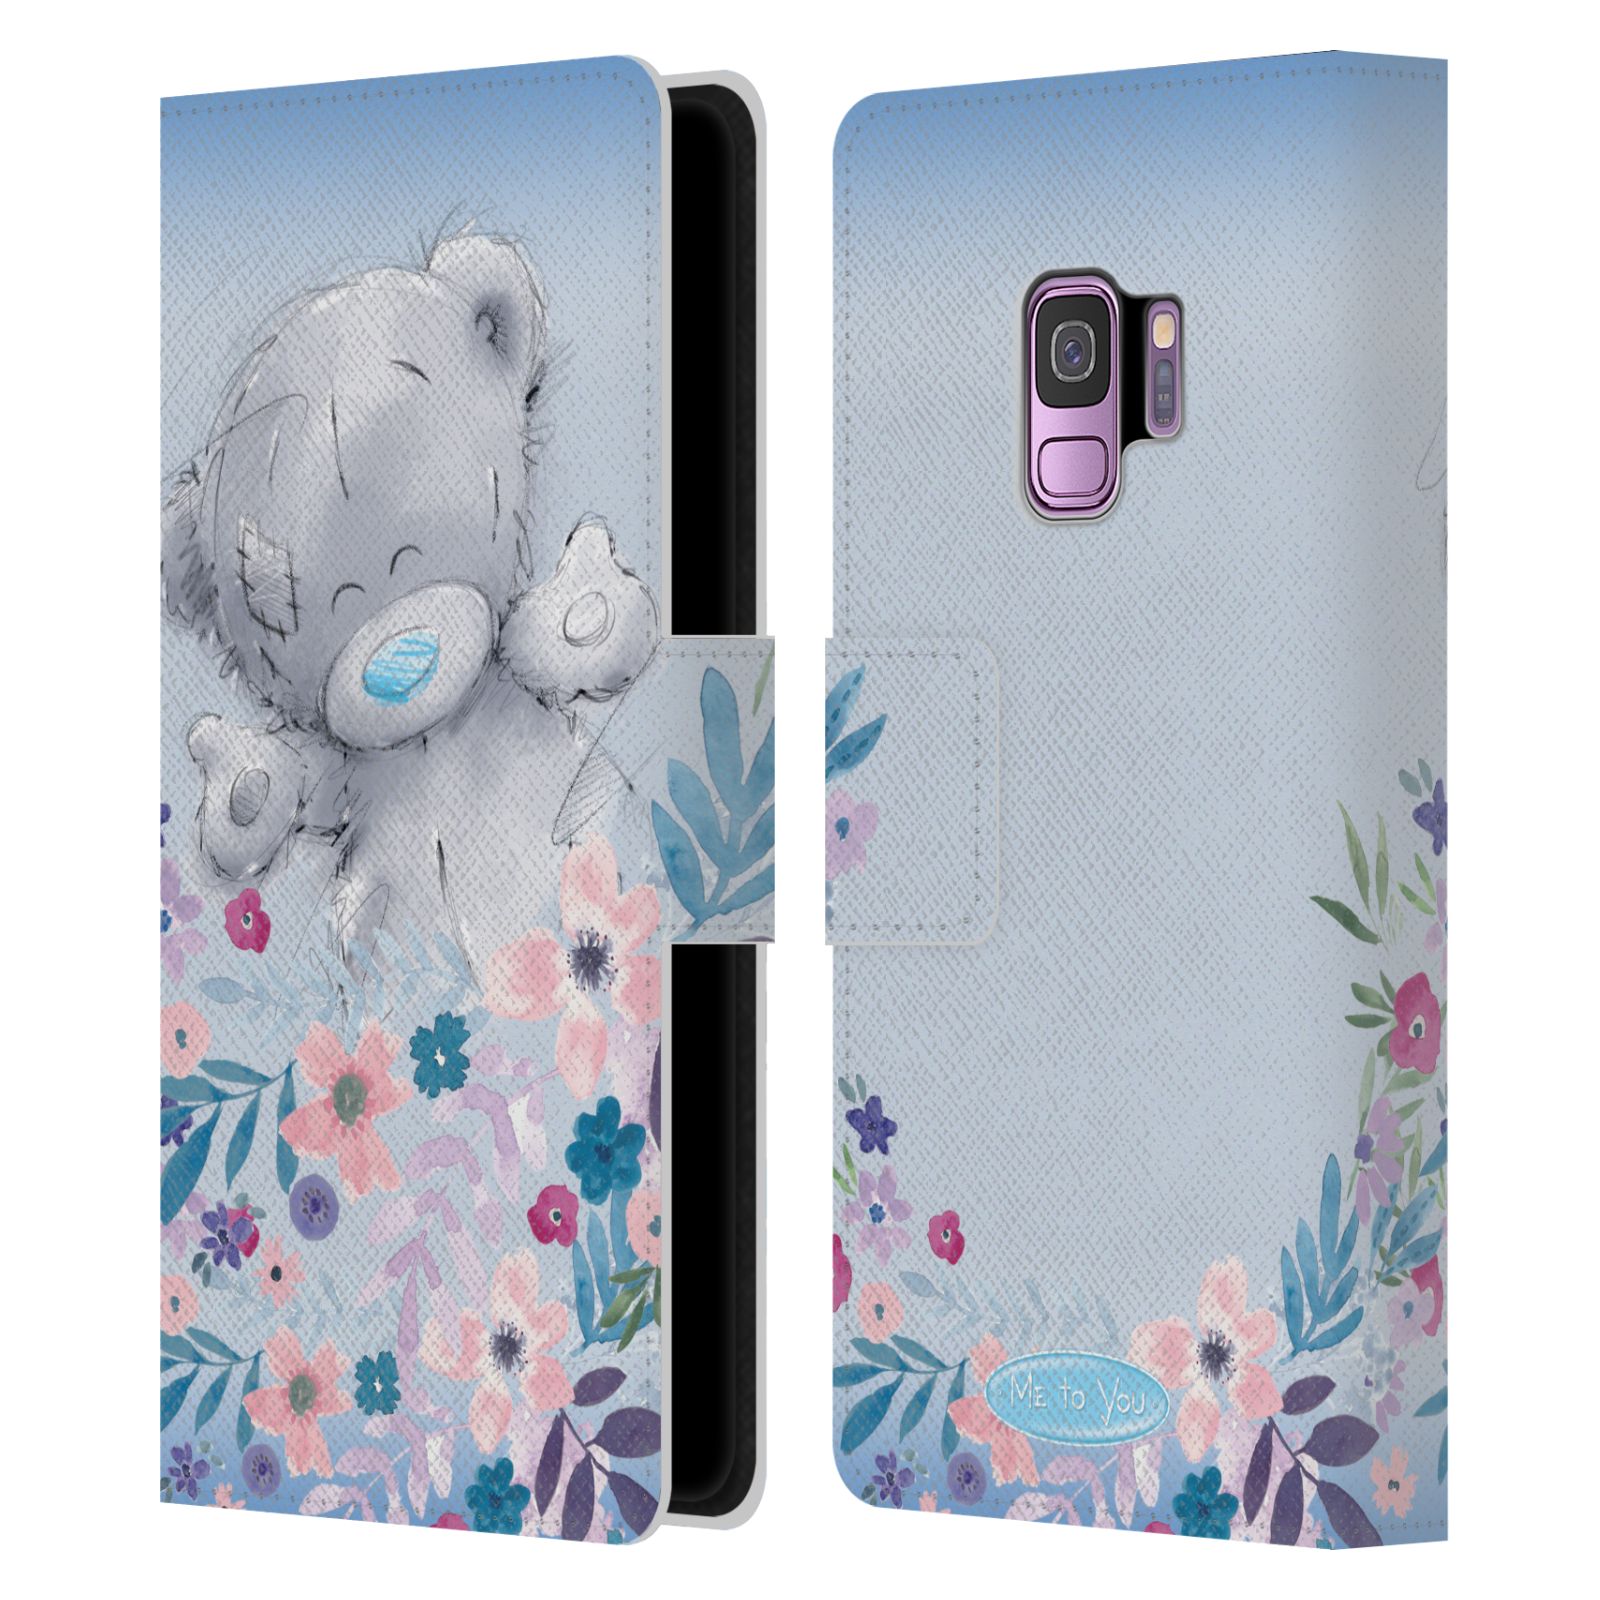 Pouzdro na mobil Samsung Galaxy S9 - HEAD CASE - Me To You - Medvídek mezi květinami